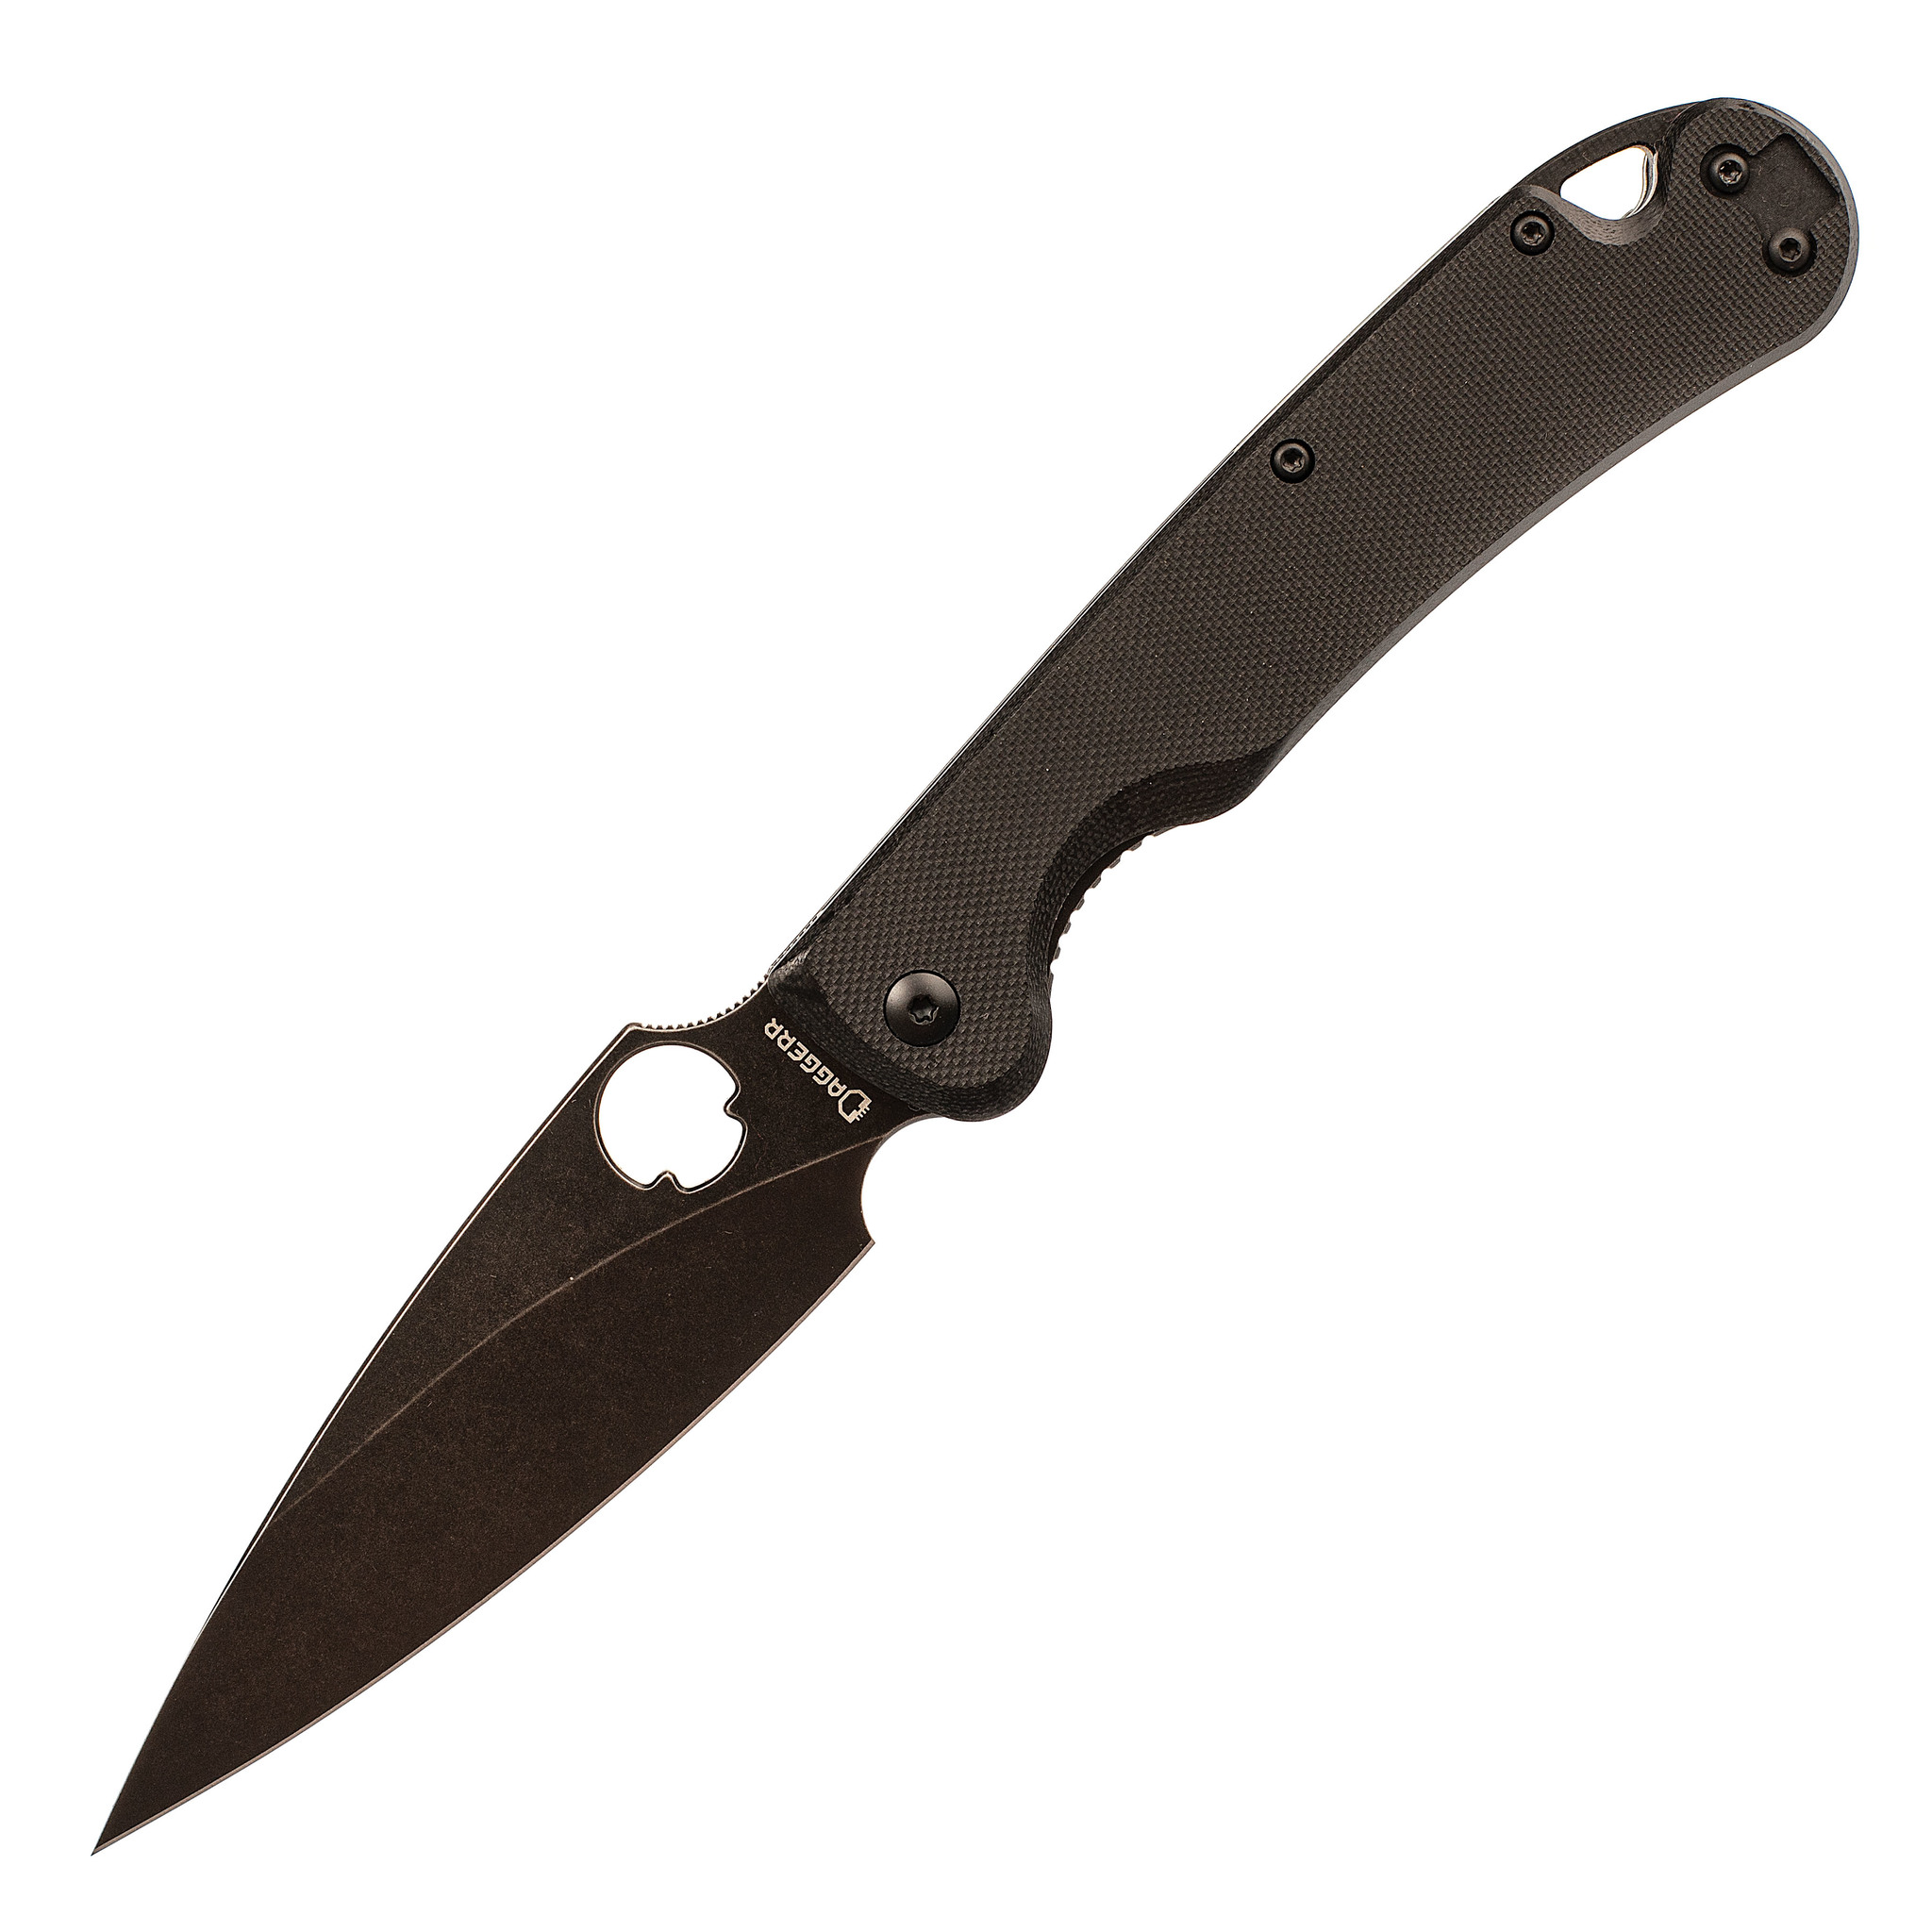 Складной нож Daggerr Sting Black BW, сталь D2, рукоять G10 складной нож daggerr pelican limited edition